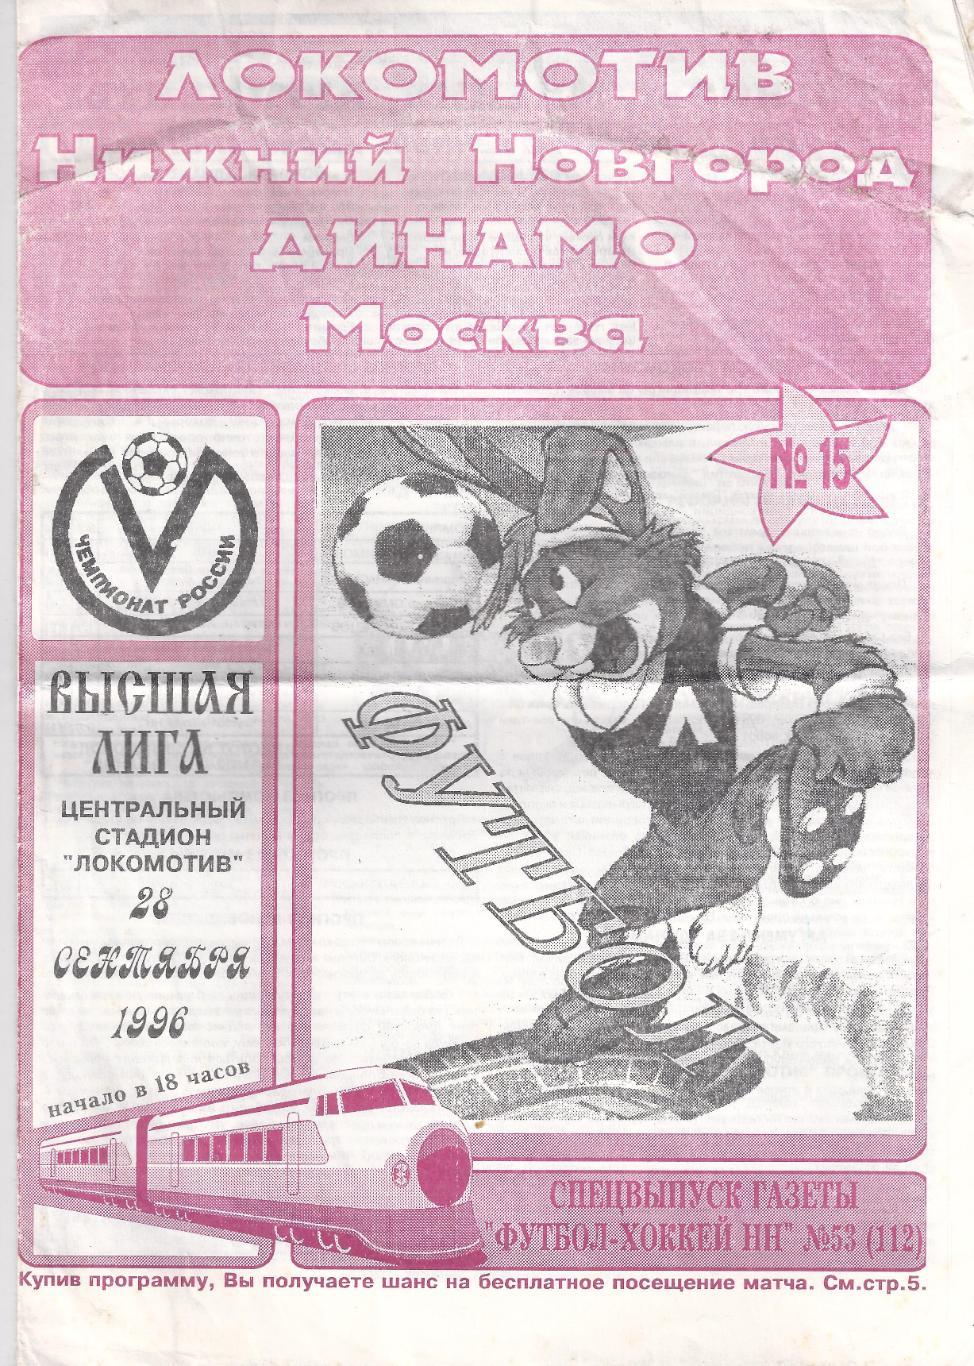 1996 - Локомотив Нижний Новгород - Динамо Москва